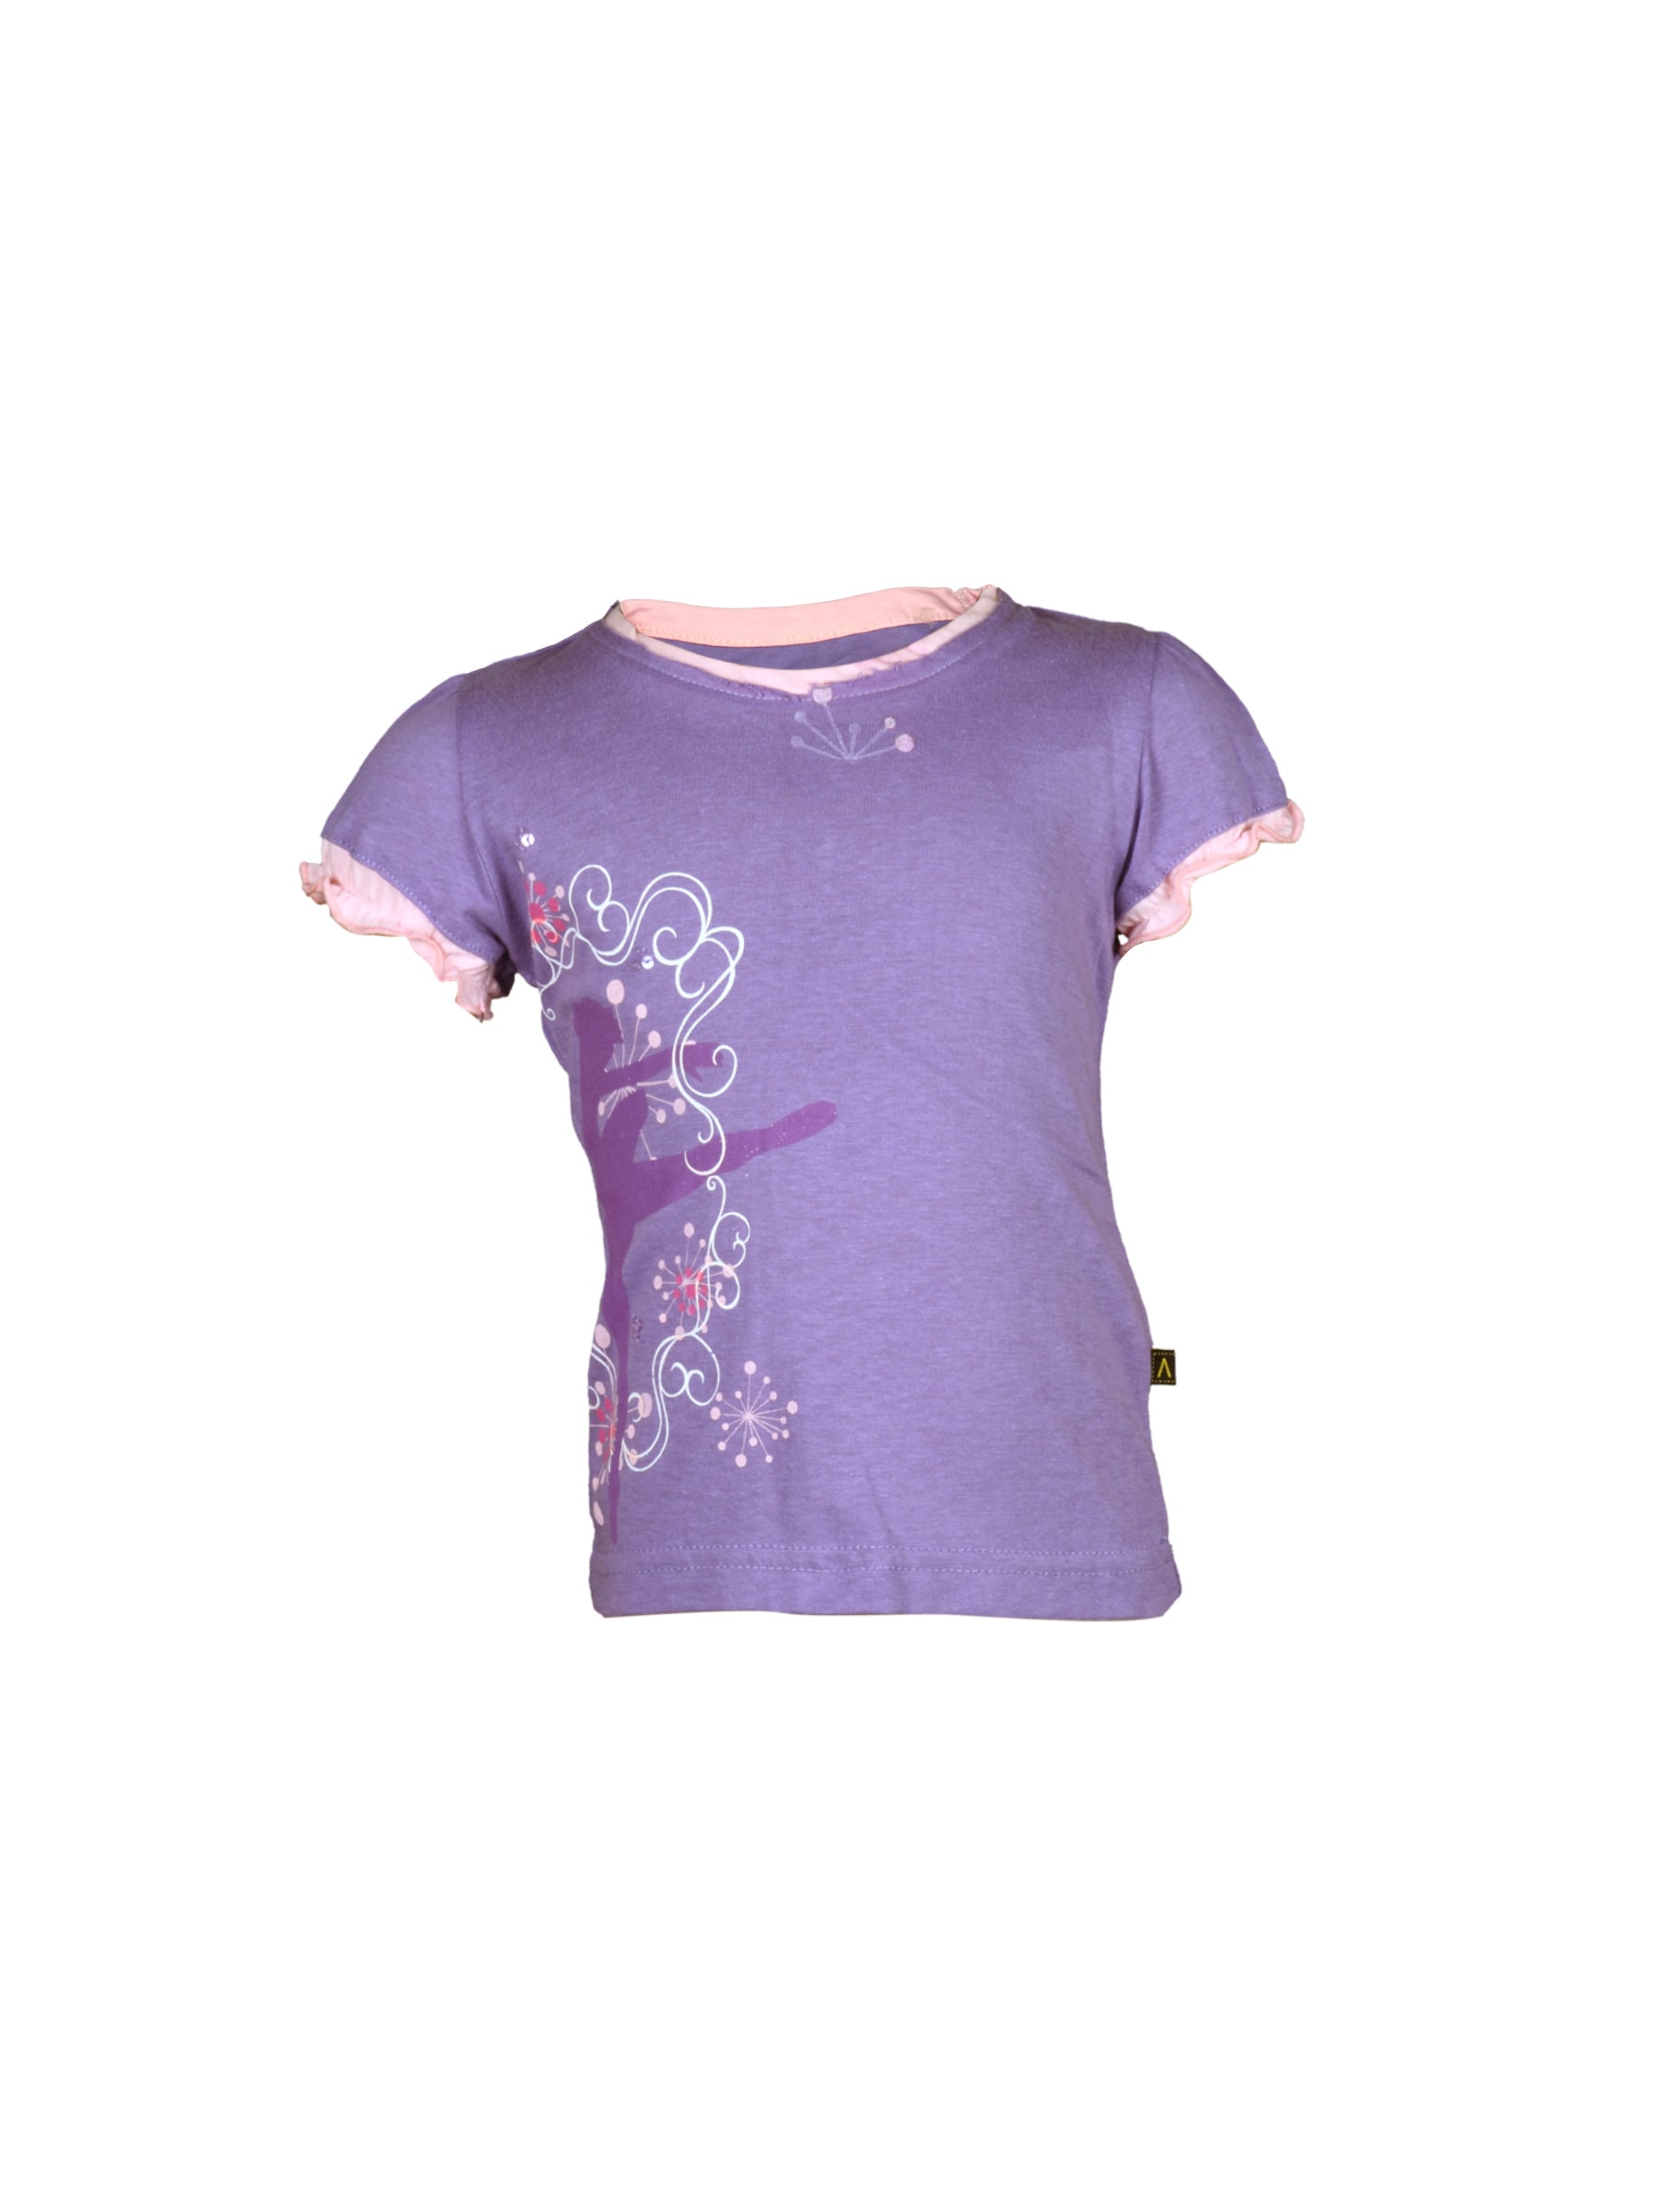 Doodle Girl's Raw Edges Purple Teen Kidswear